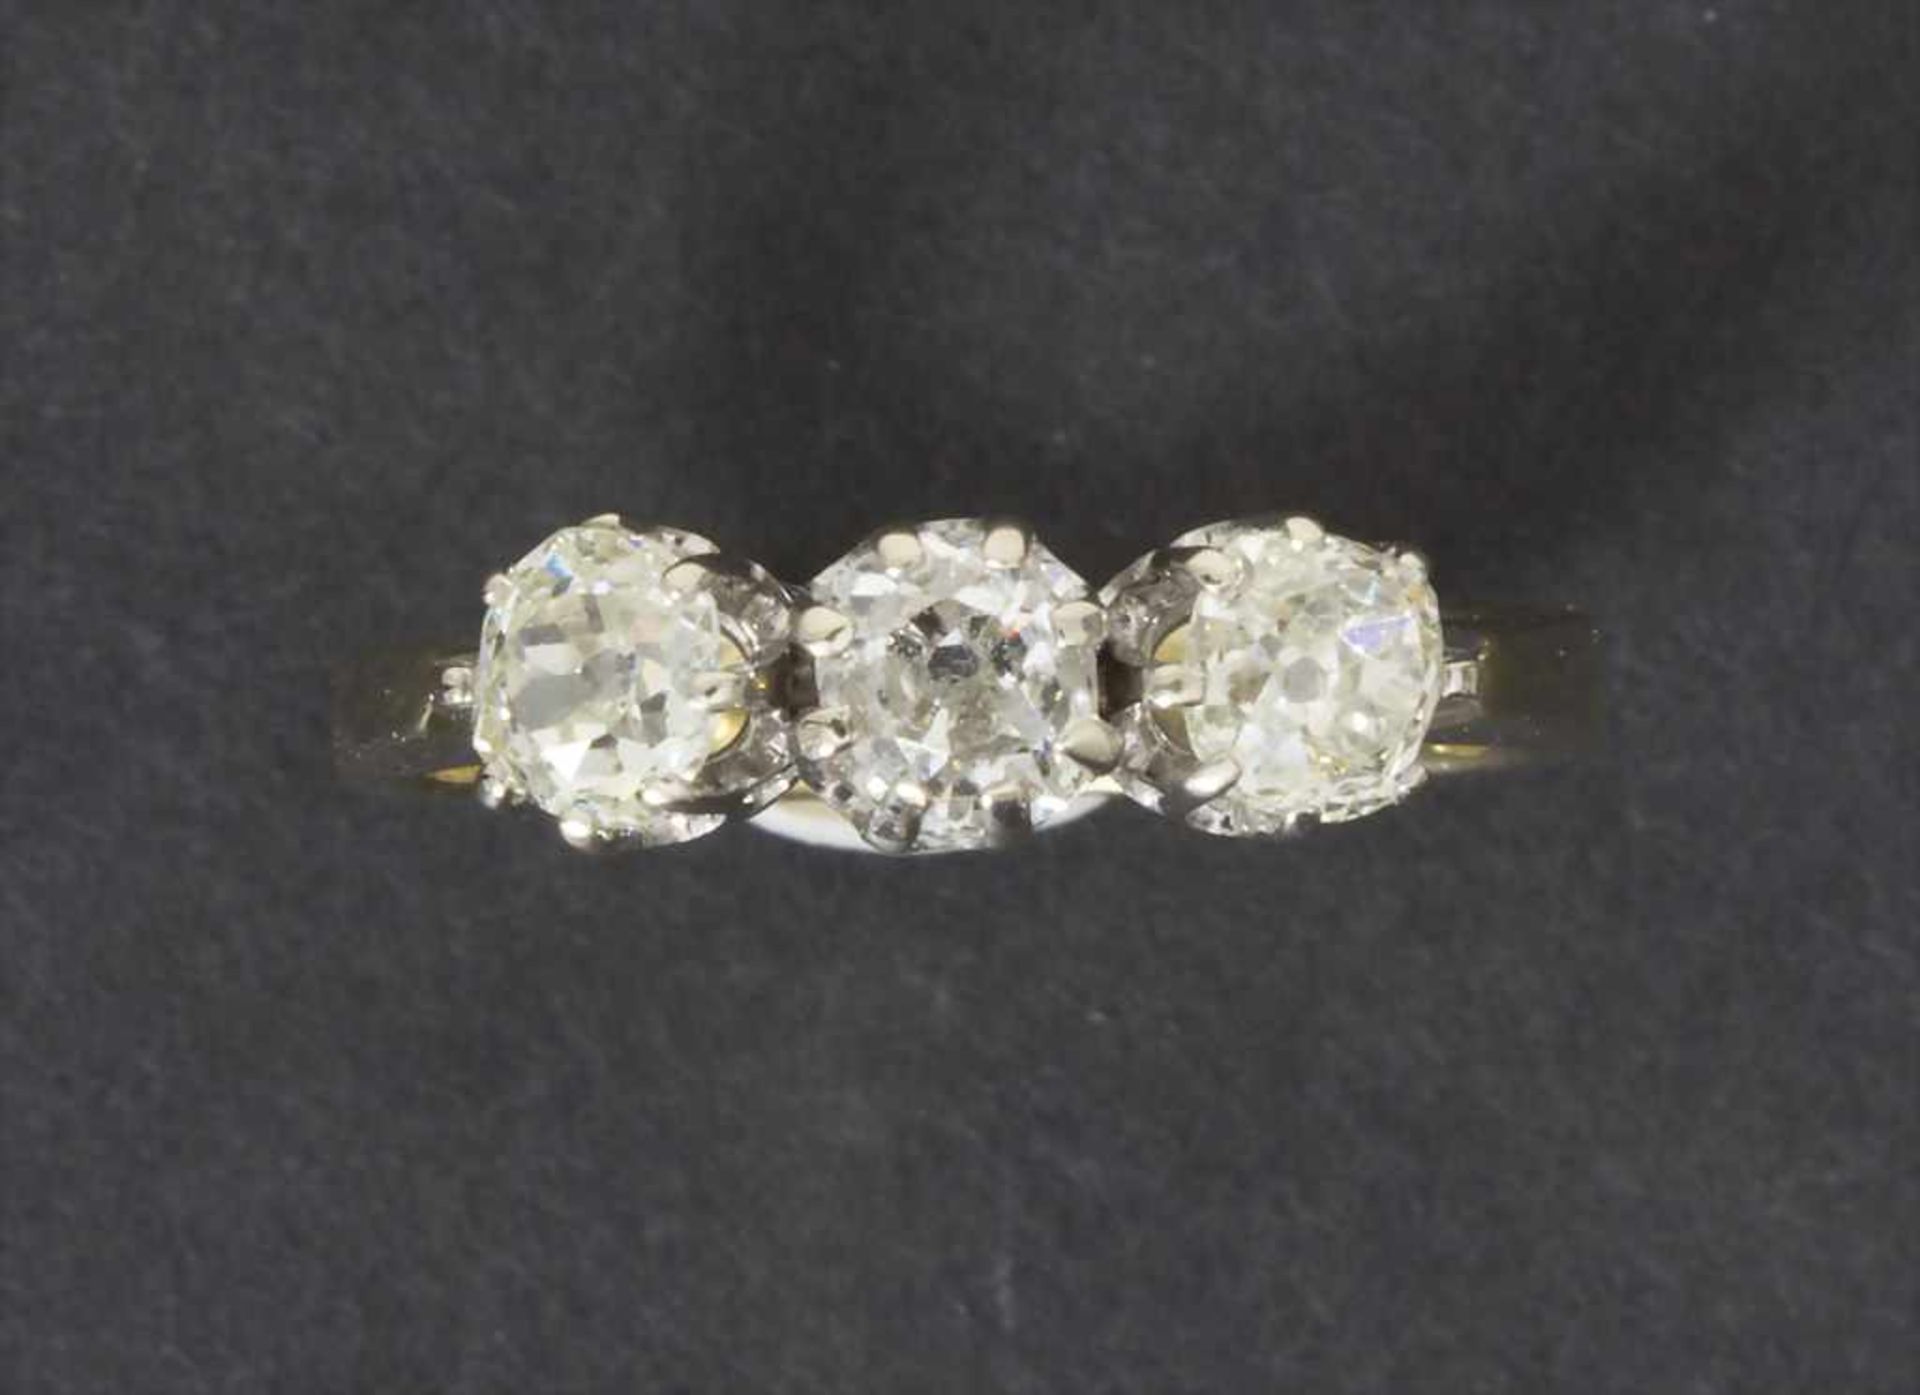 Damenring mit Diamanten / A ladies ring with diamondsMaterial: Gold Au 750/000 18 Kt, 3 Altschliff-